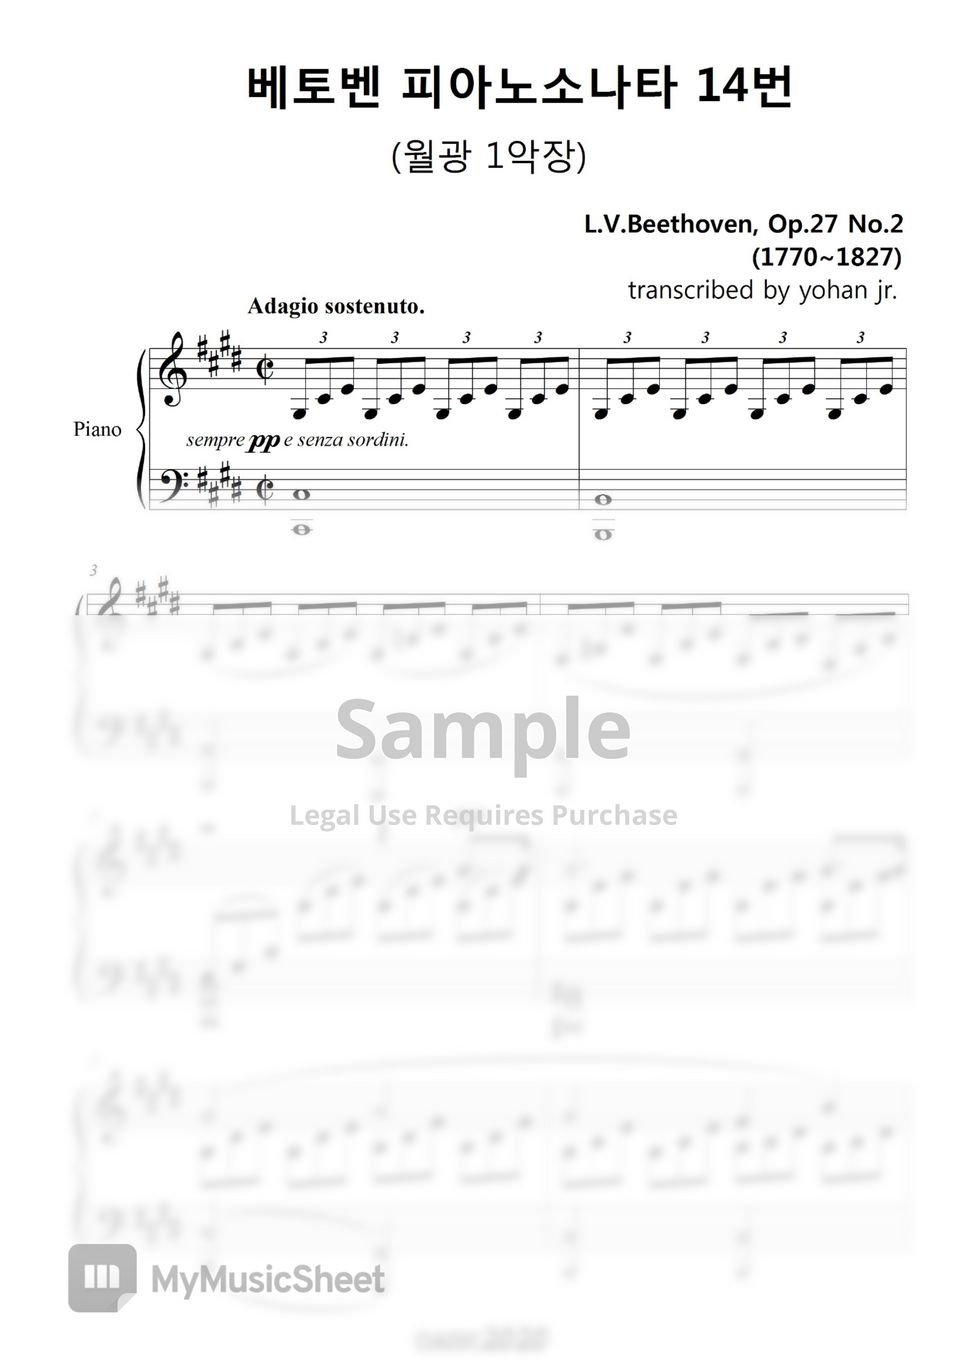 L.V. Beethoven - Moonlight Sonata 1st. by classic2020